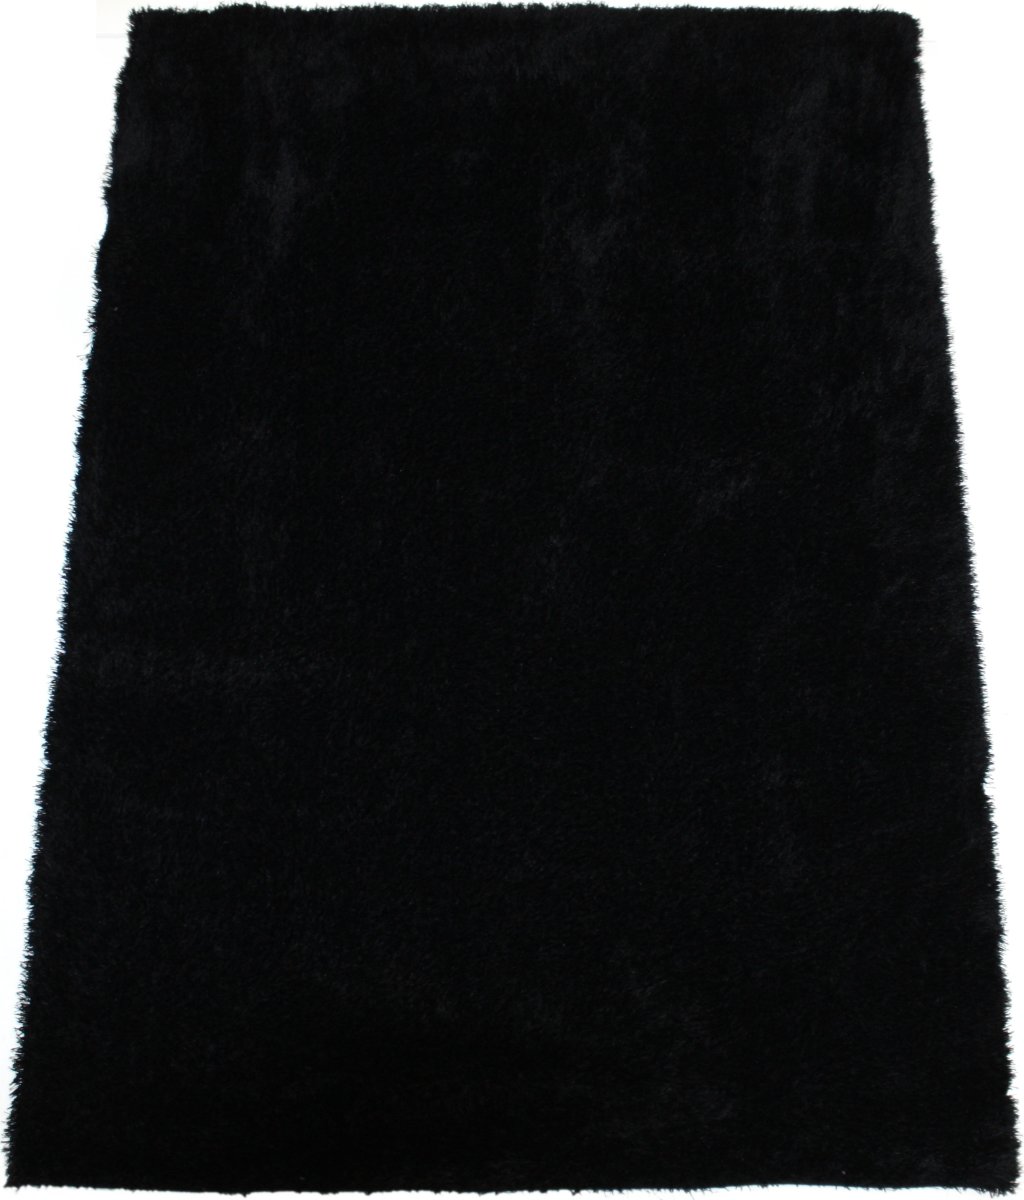 Easy Cozy svart matta, 140x200 cm.